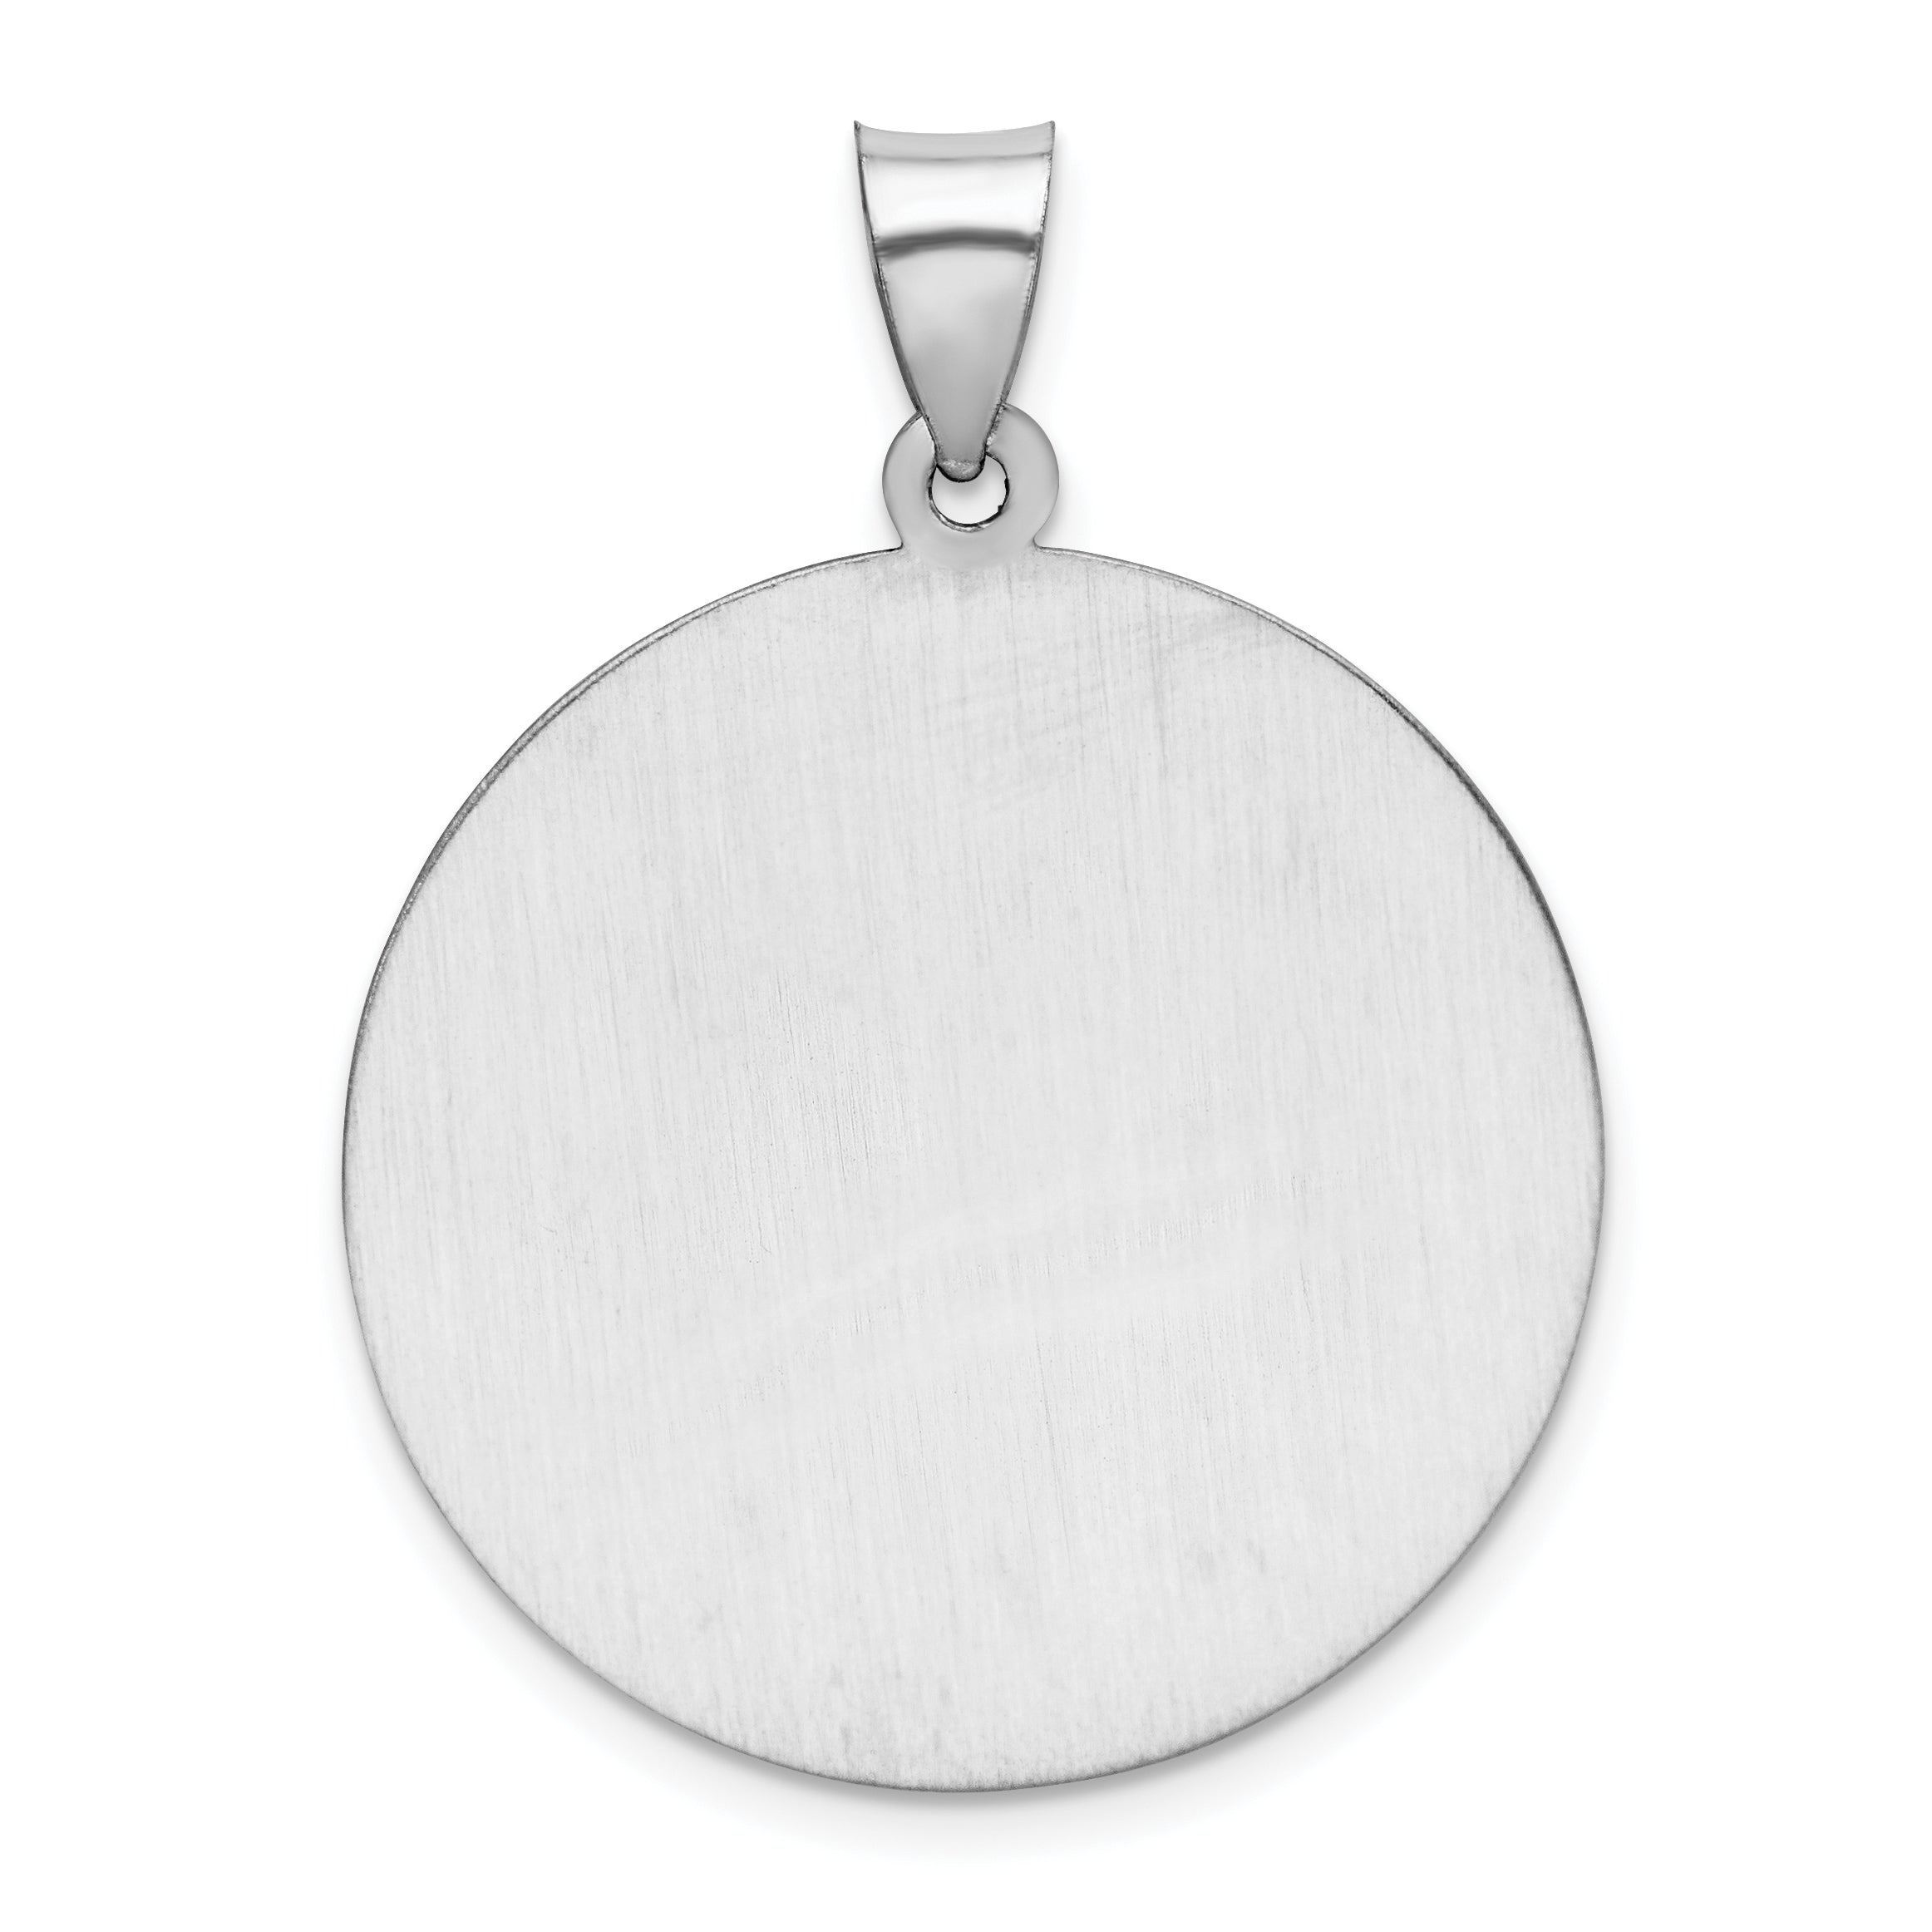 14K White Gold Polished/Satin St Christopher Medal Hollow Pendant